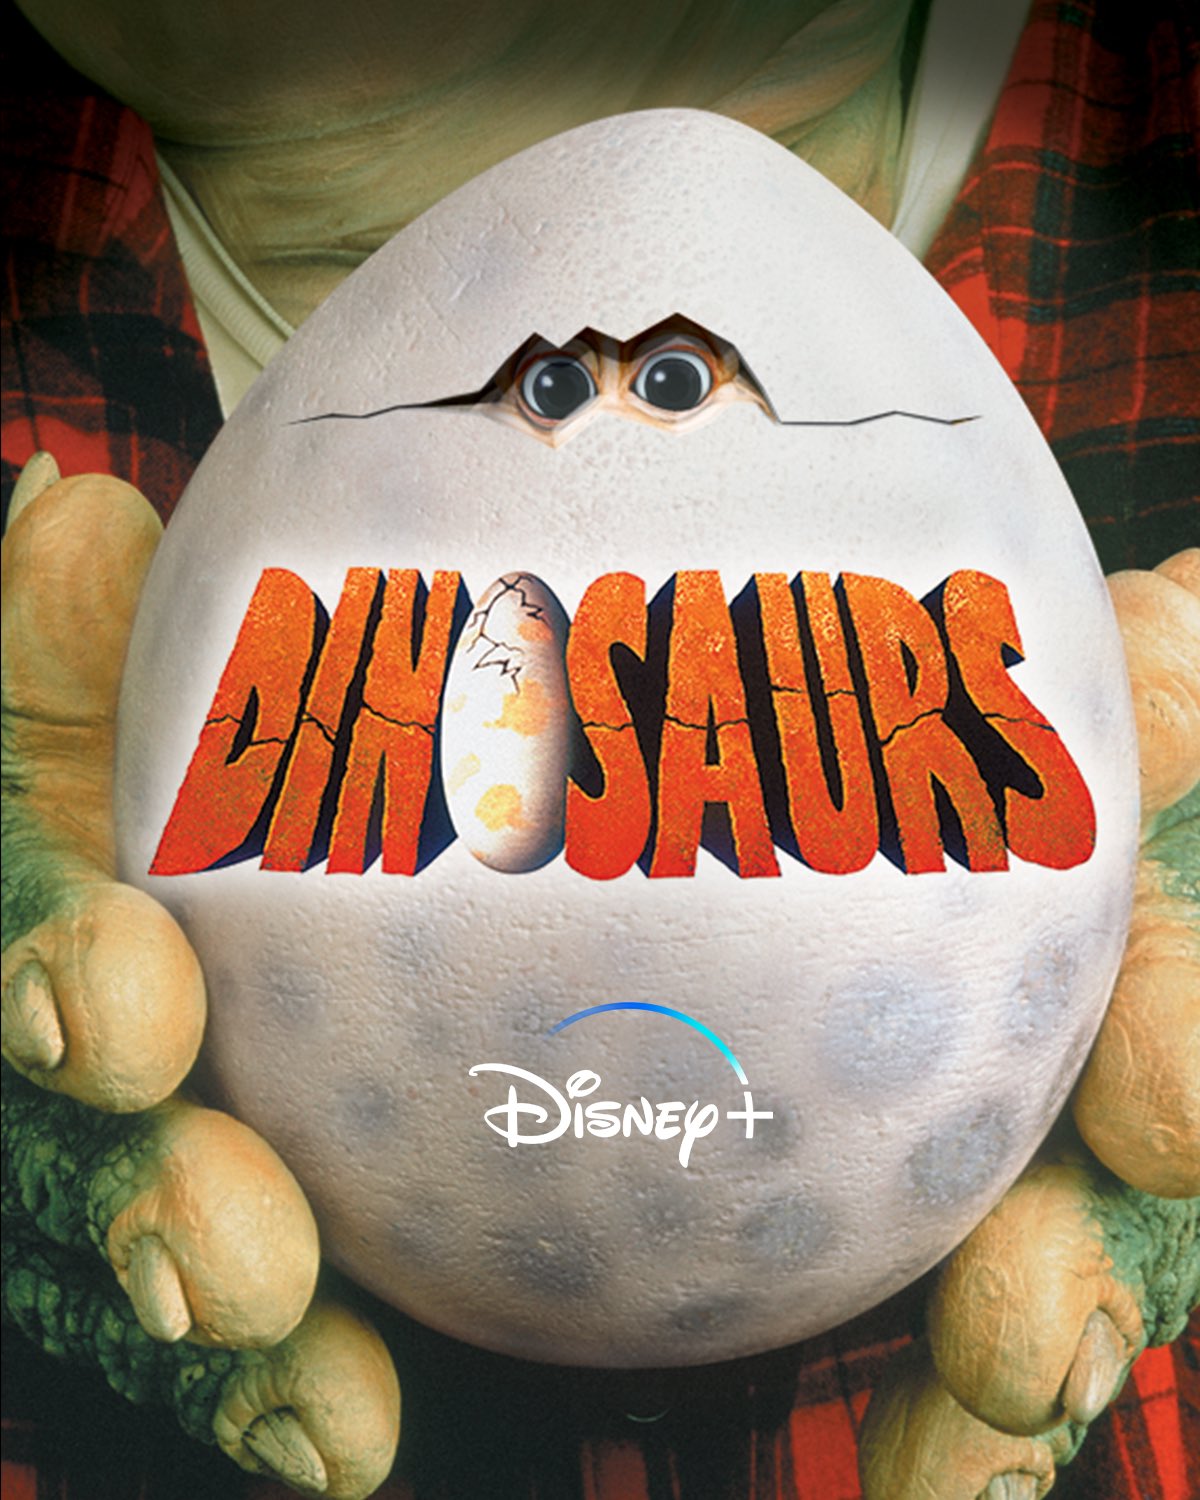 [TV] Dinosaurs Season 4 (Disney Plus)